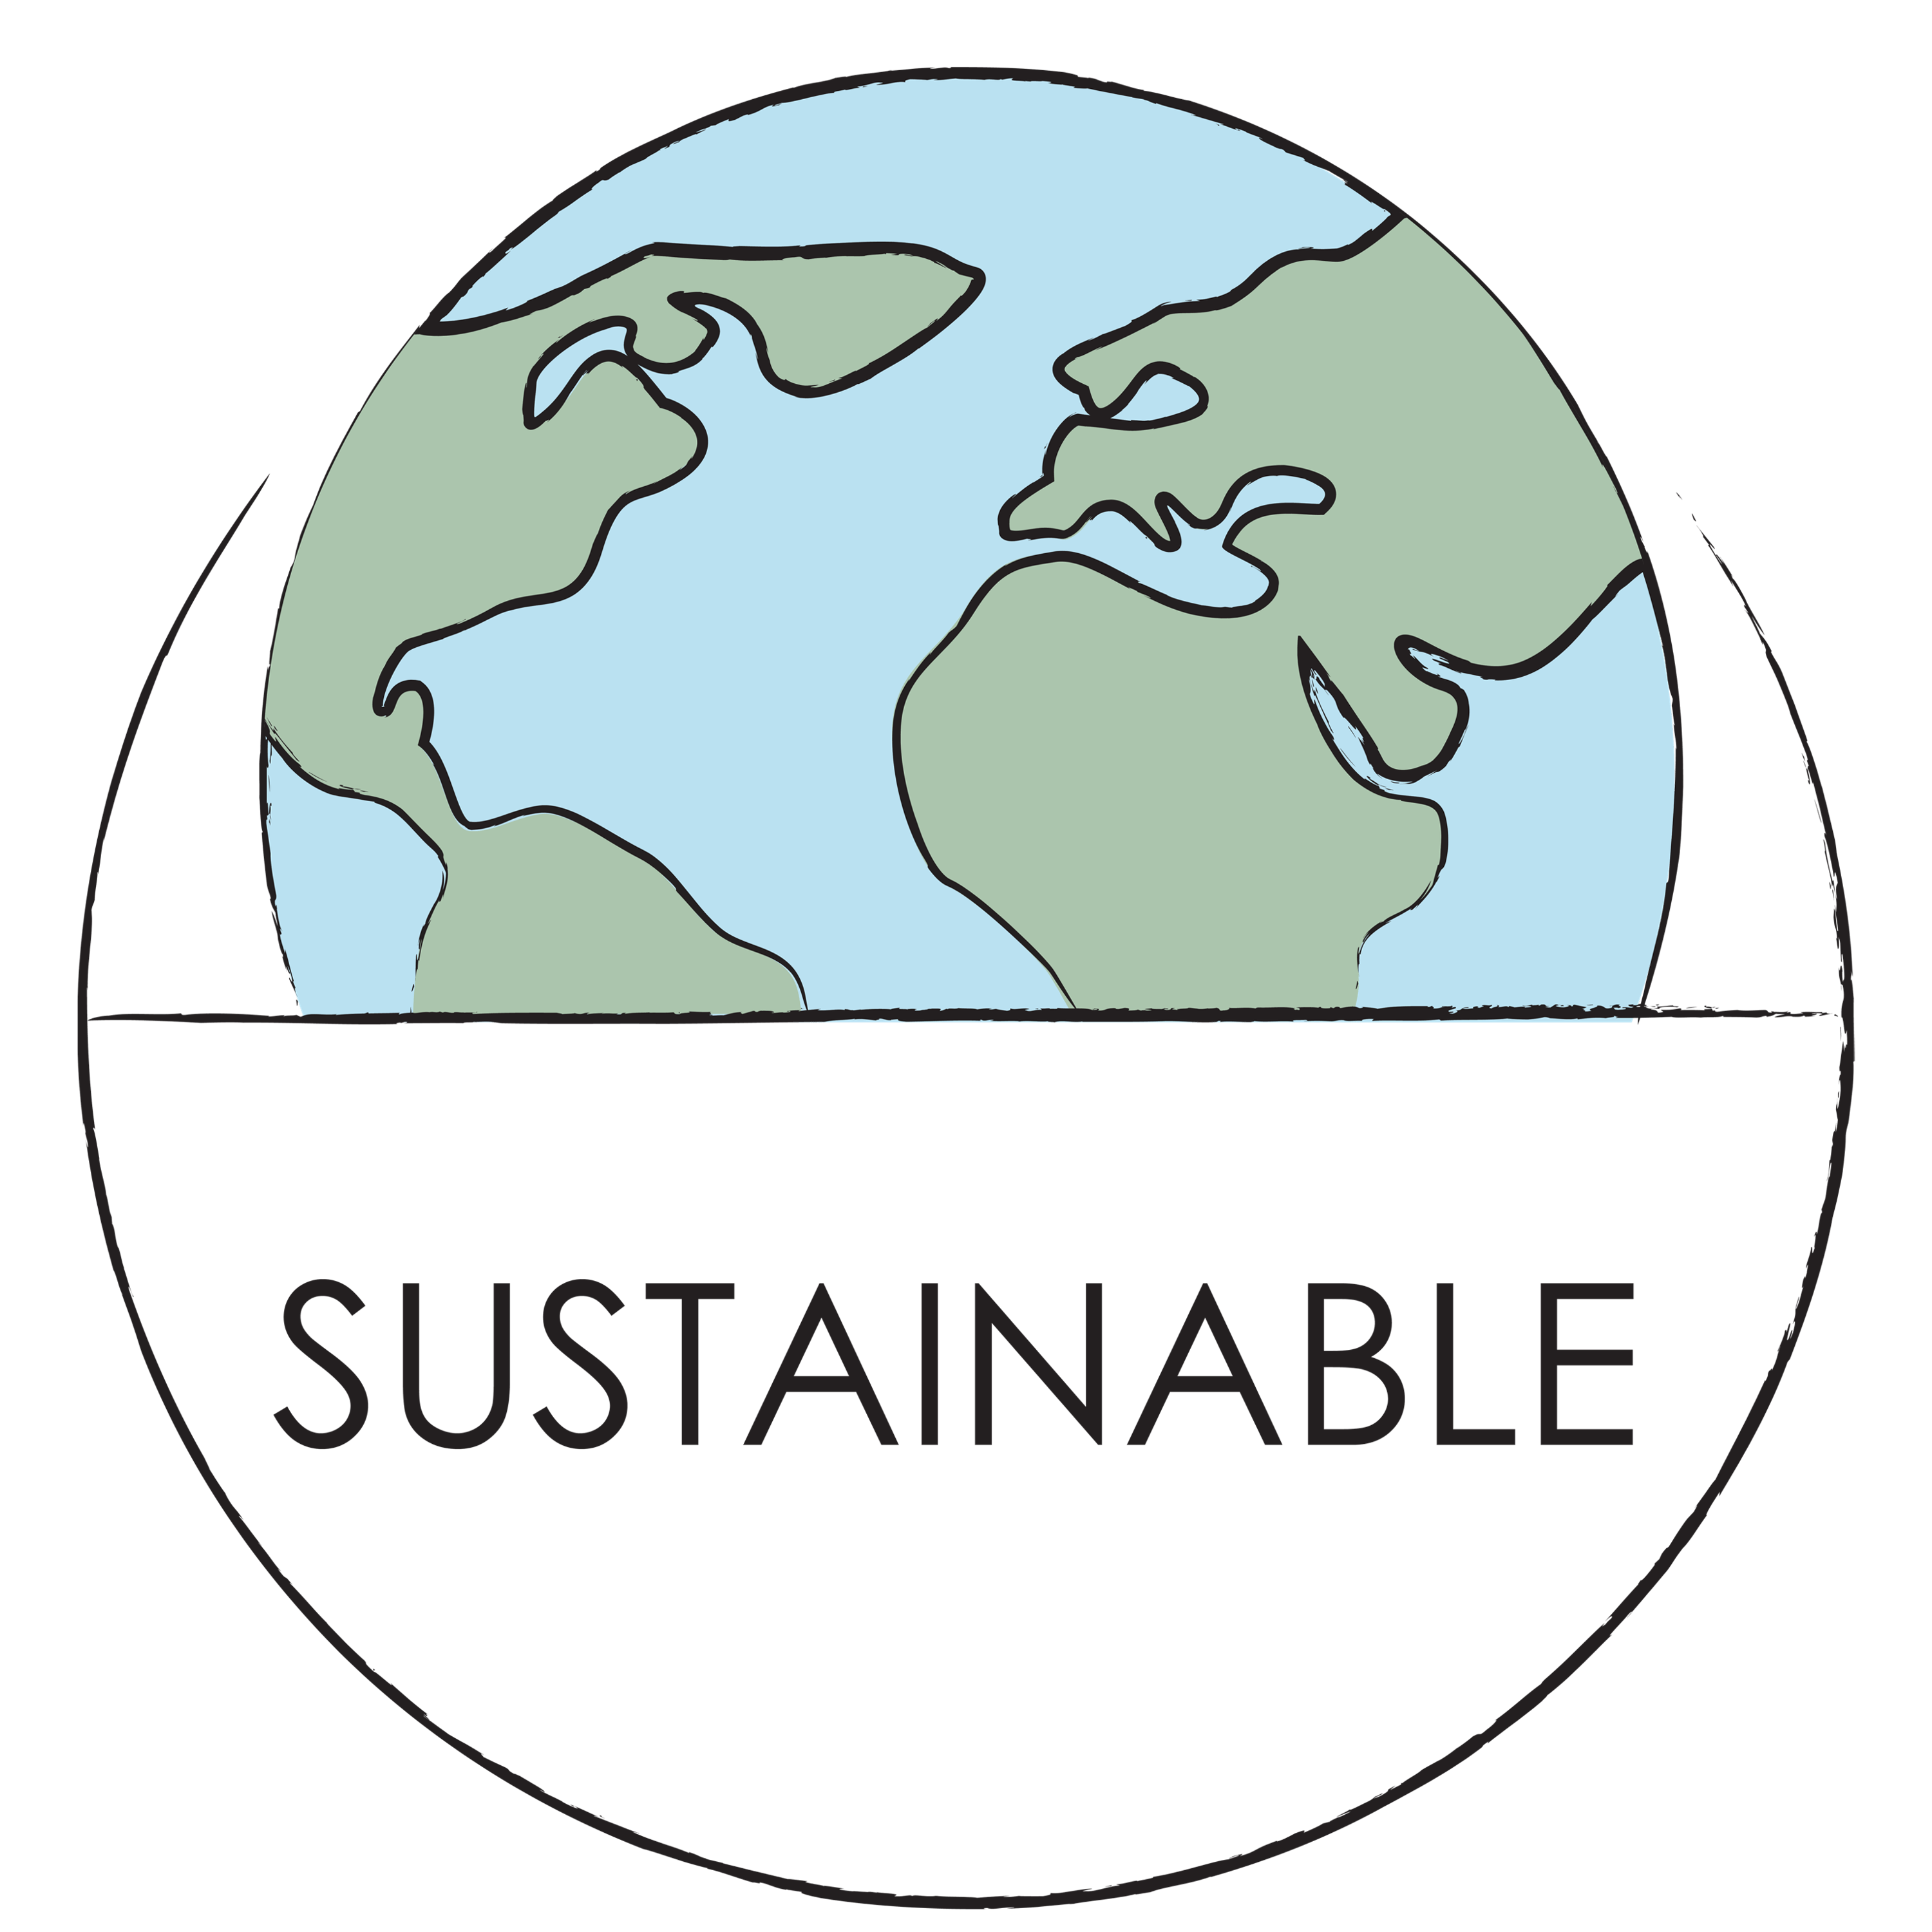 Leaf Logo: We are sustainable